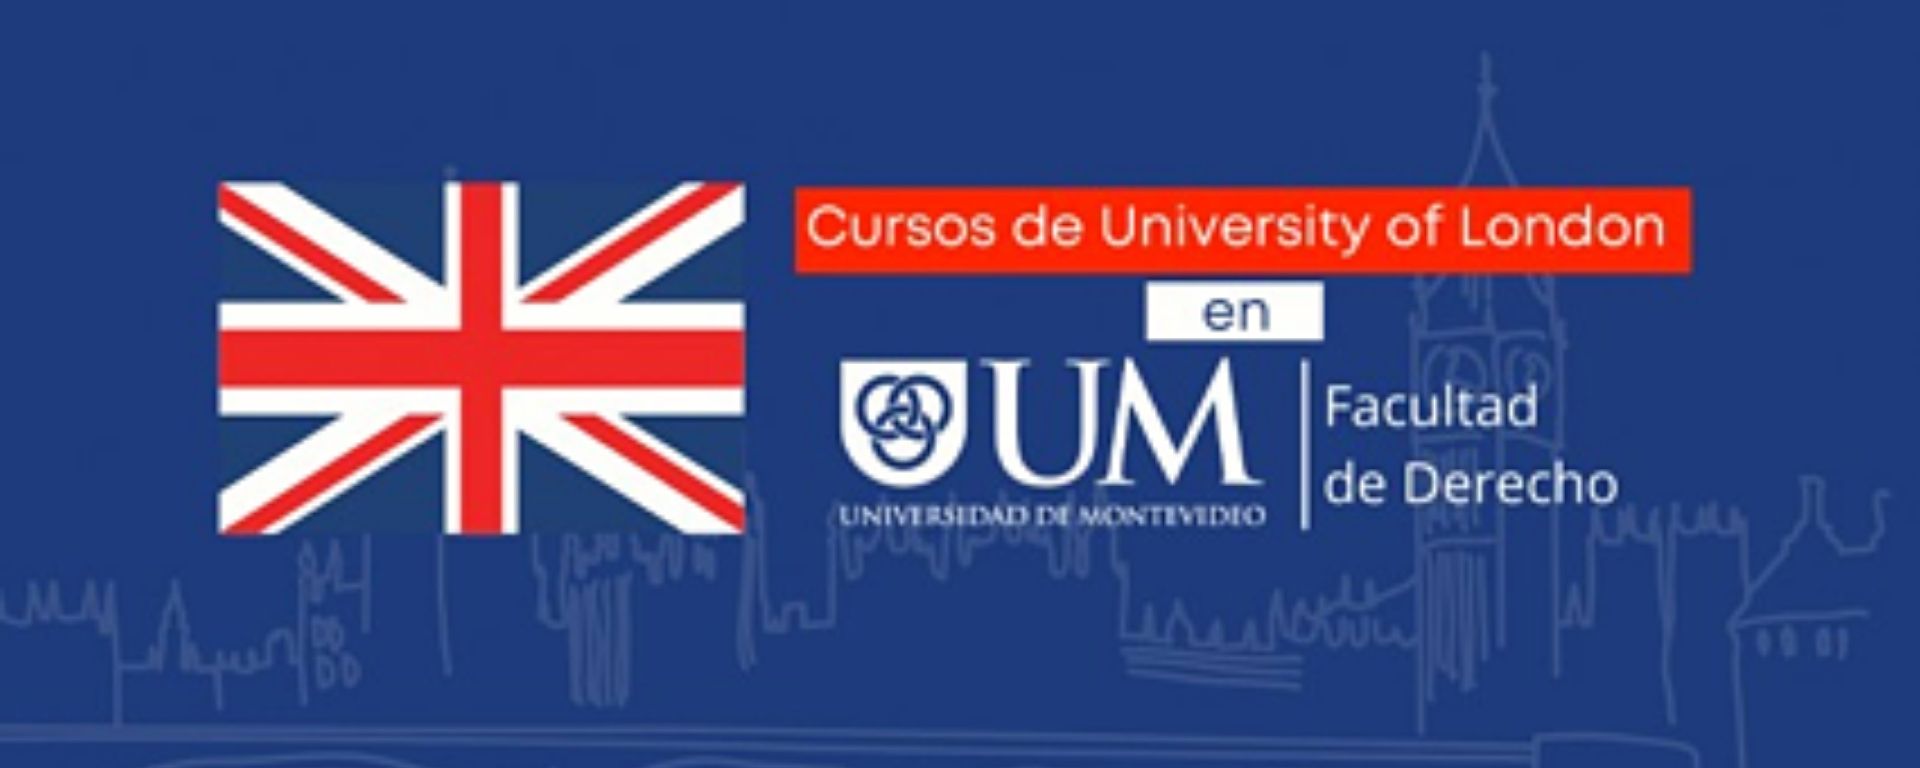 Flyer cursos de University of London